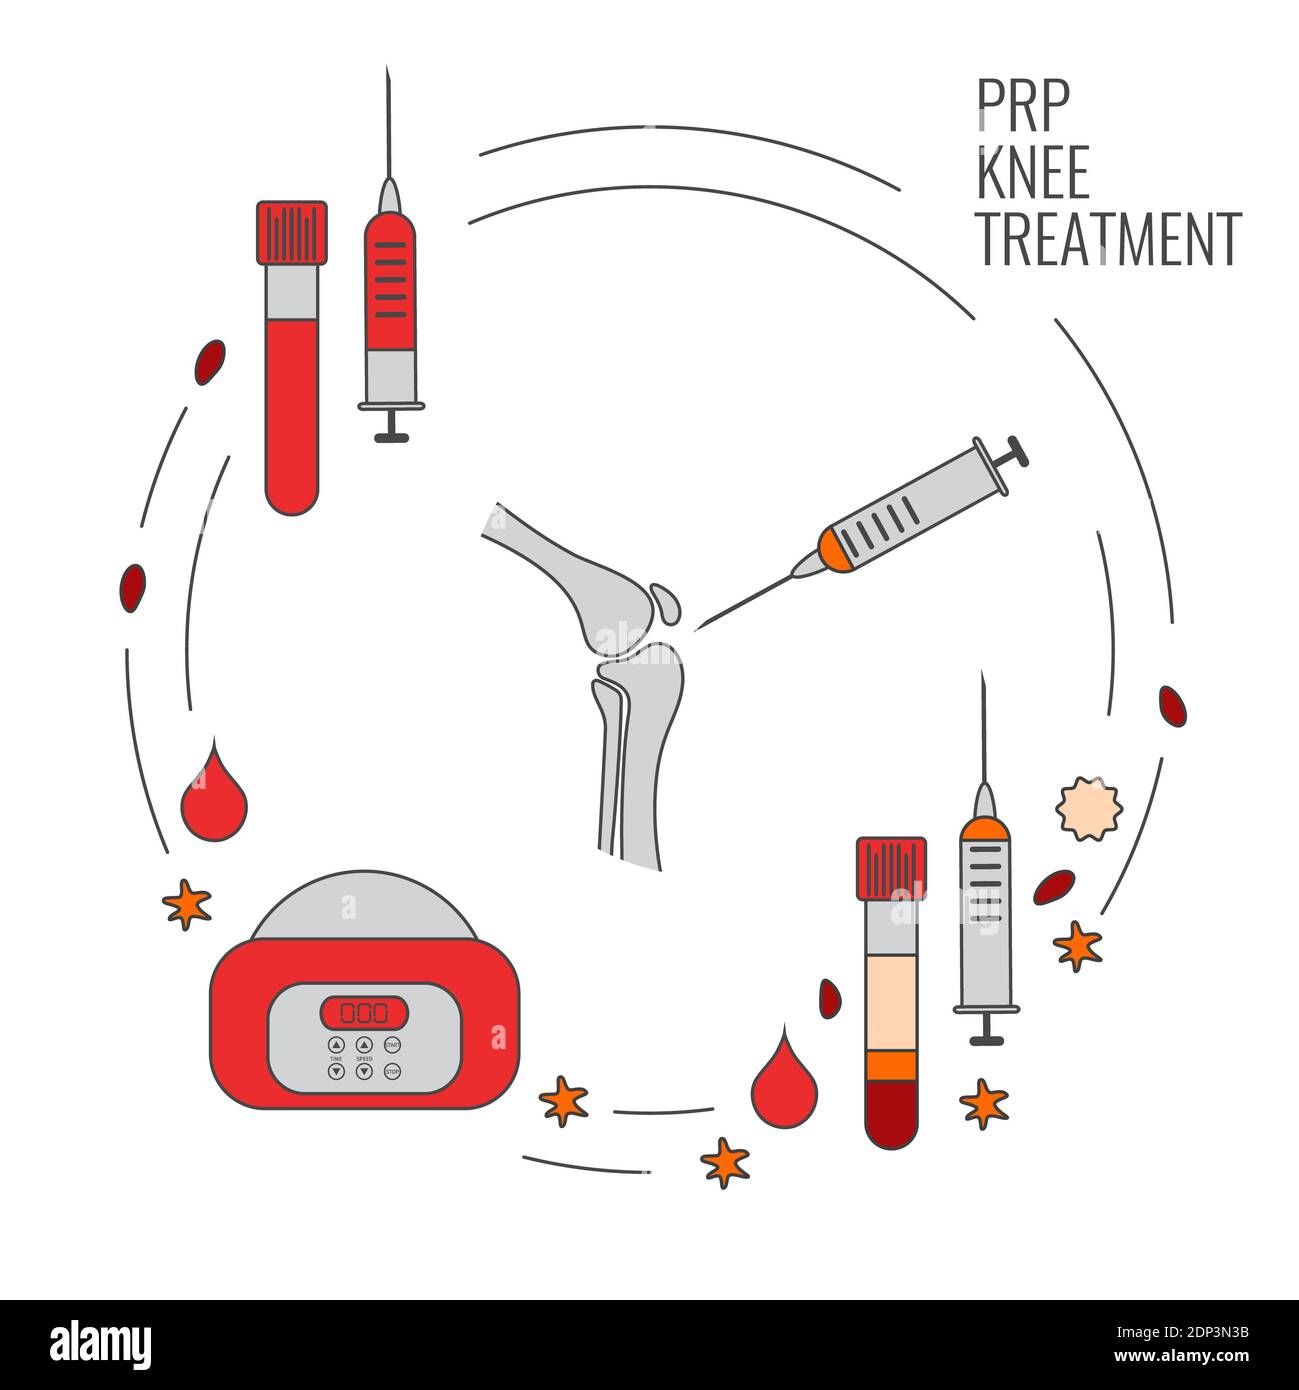 Platelet-rich plasma knee treatment, illustration. Stock Photo